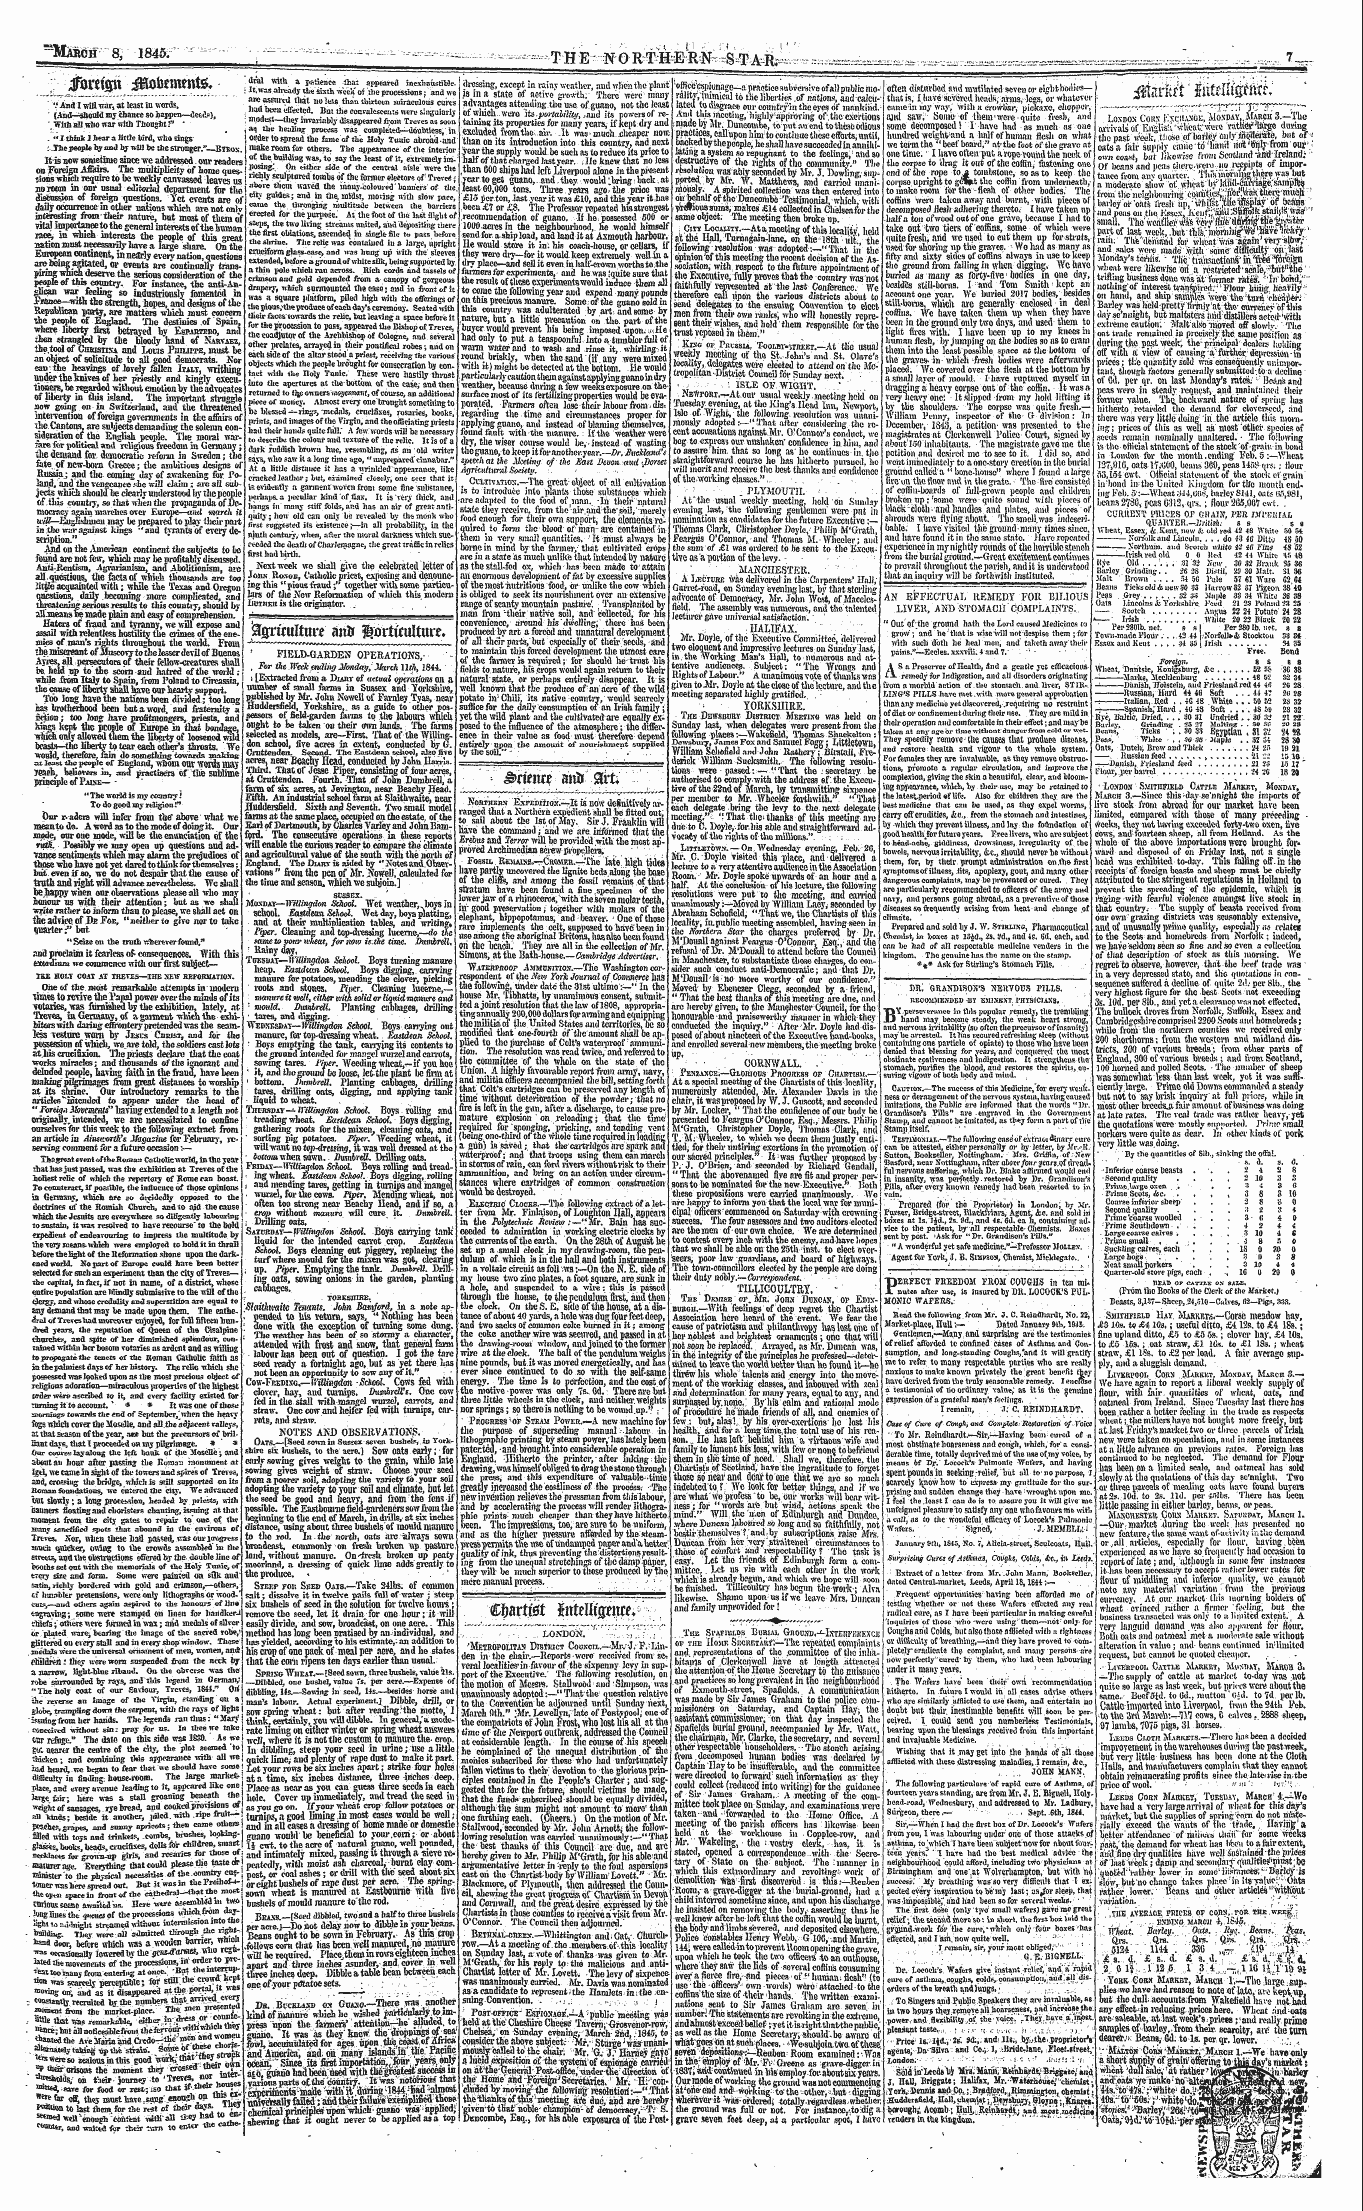 Northern Star (1837-1852): jS F Y, 3rd edition - Ad00716